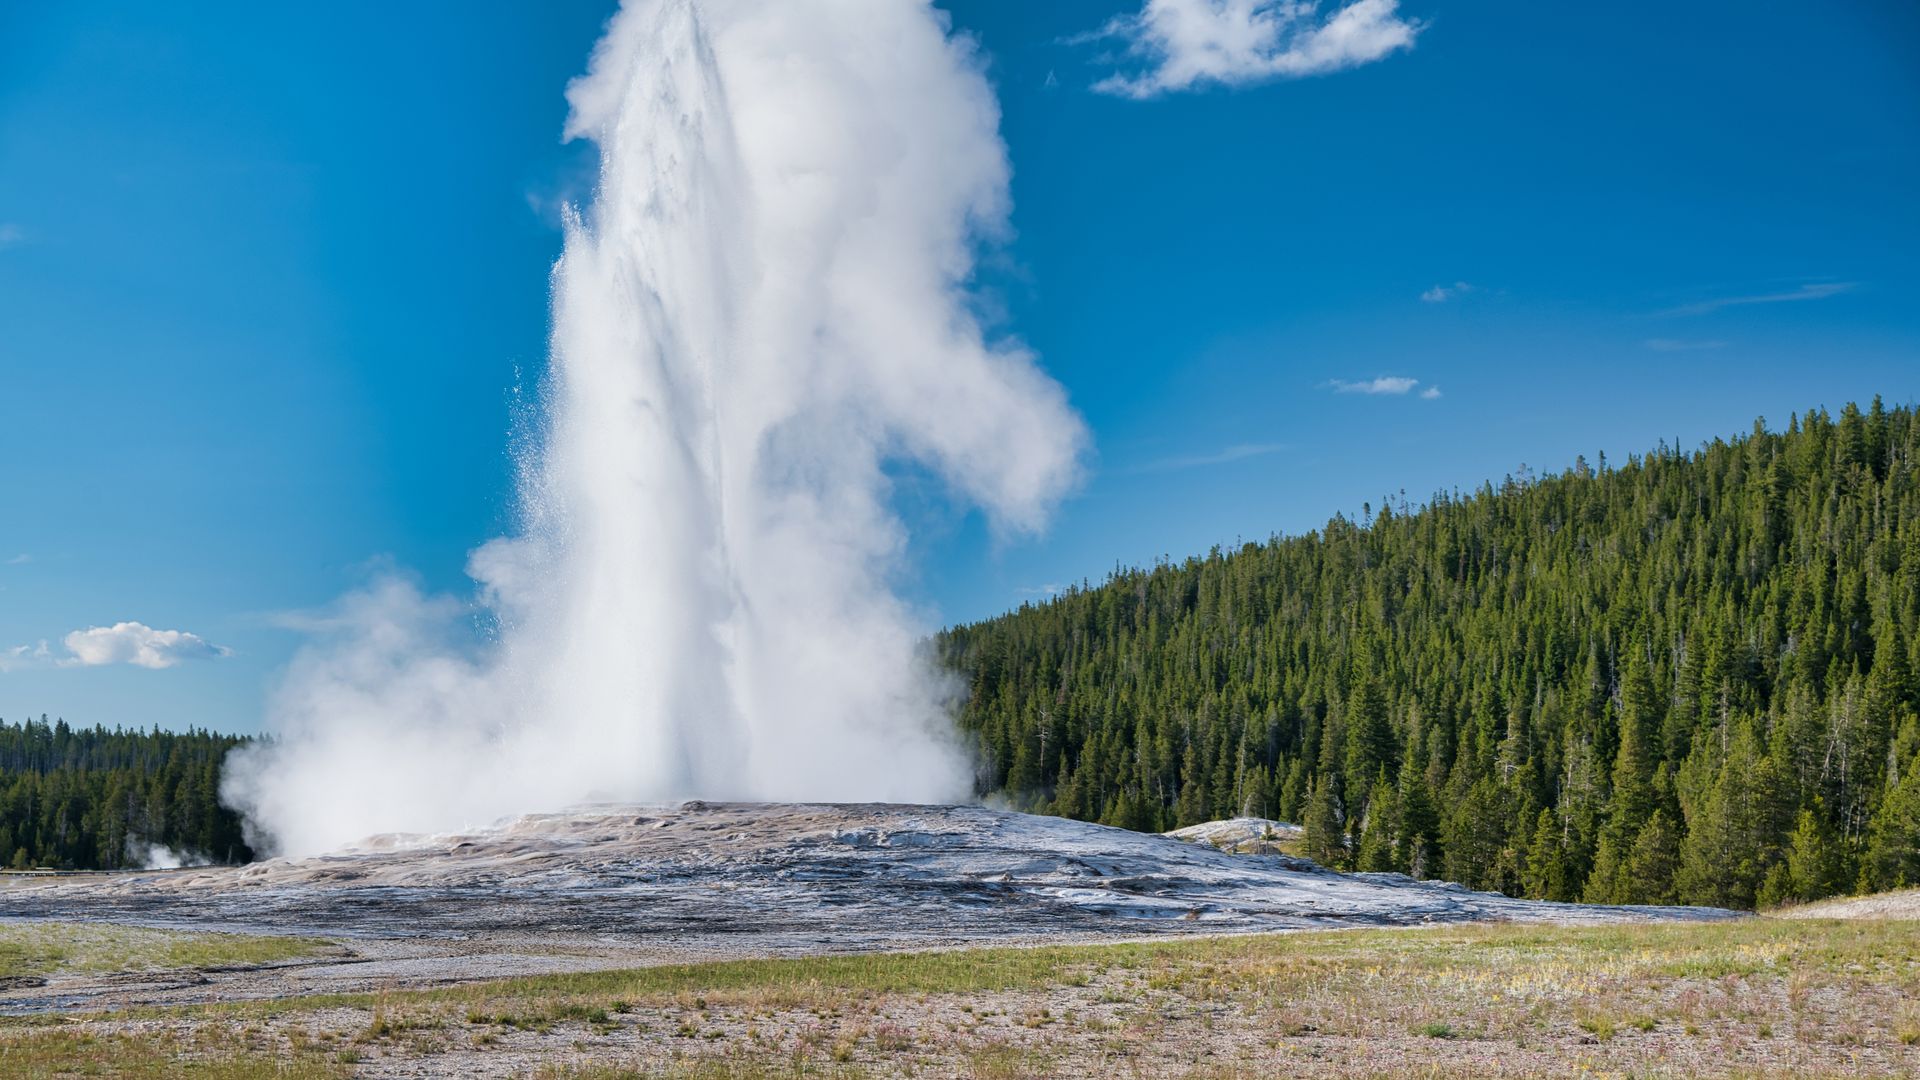 Photo of Yellowstone National Park's Old Faithful geyser exploding